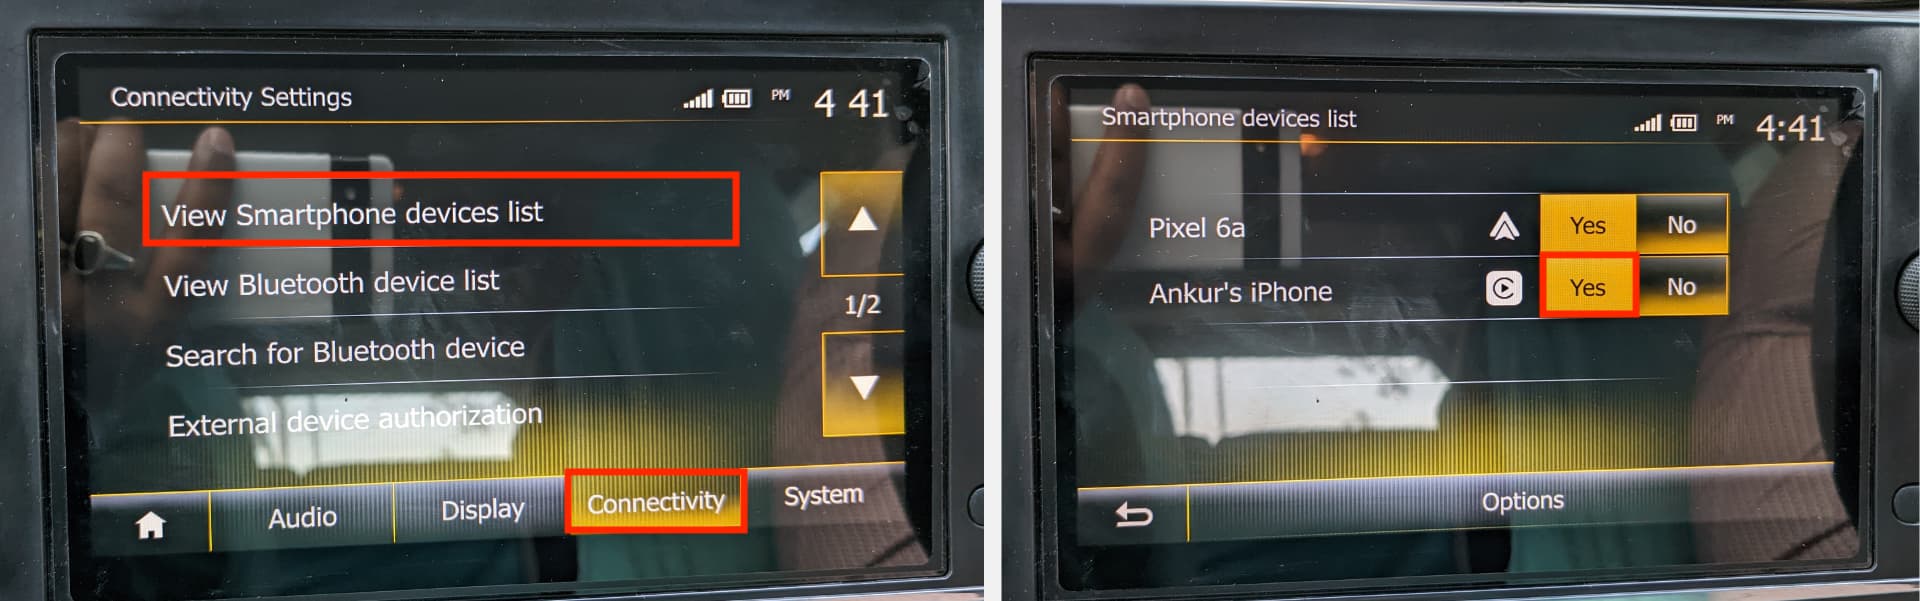 Turn on CarPlay for iPhone in car settings